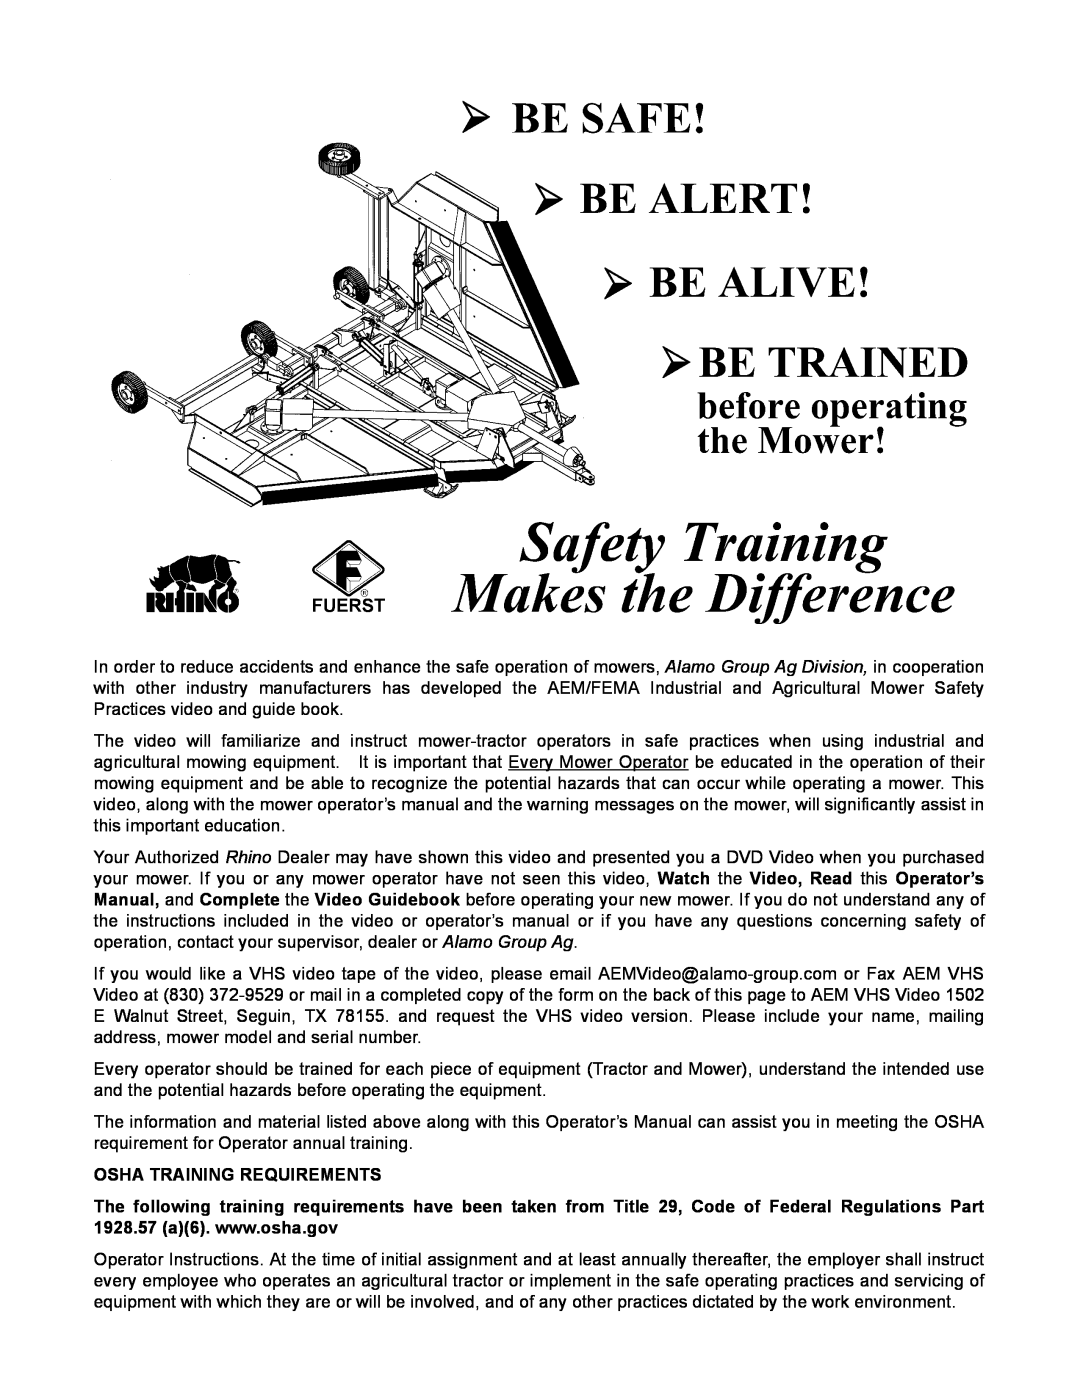 Blue Rhino FC-0025, FC-0024 manual Osha Training Requirements 